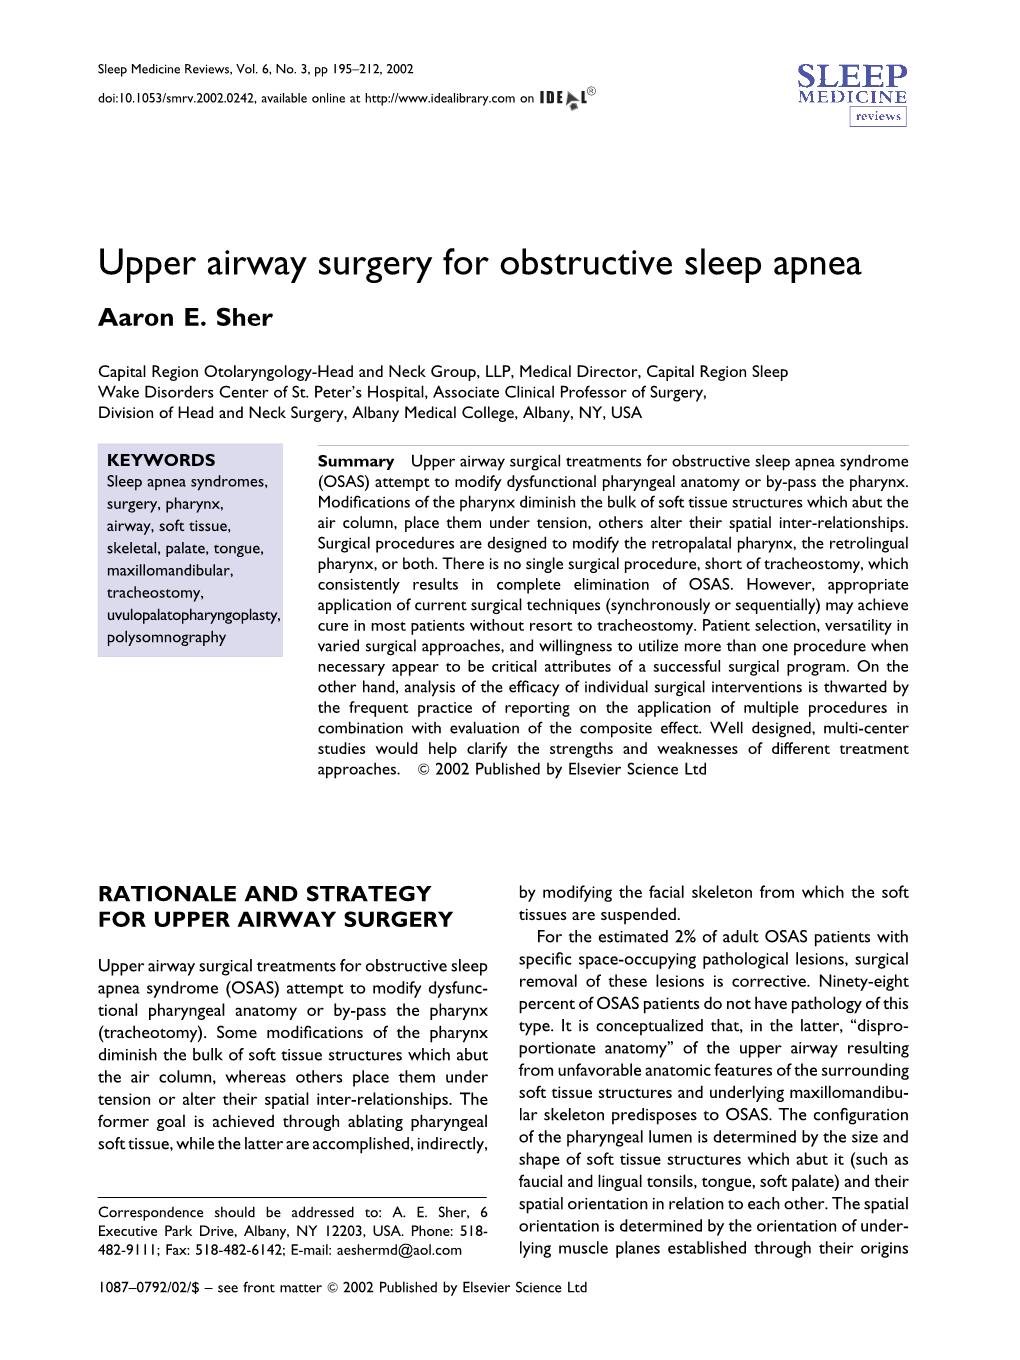 Upper Airway Surgery for Obstructive Sleep Apnea Aaron E